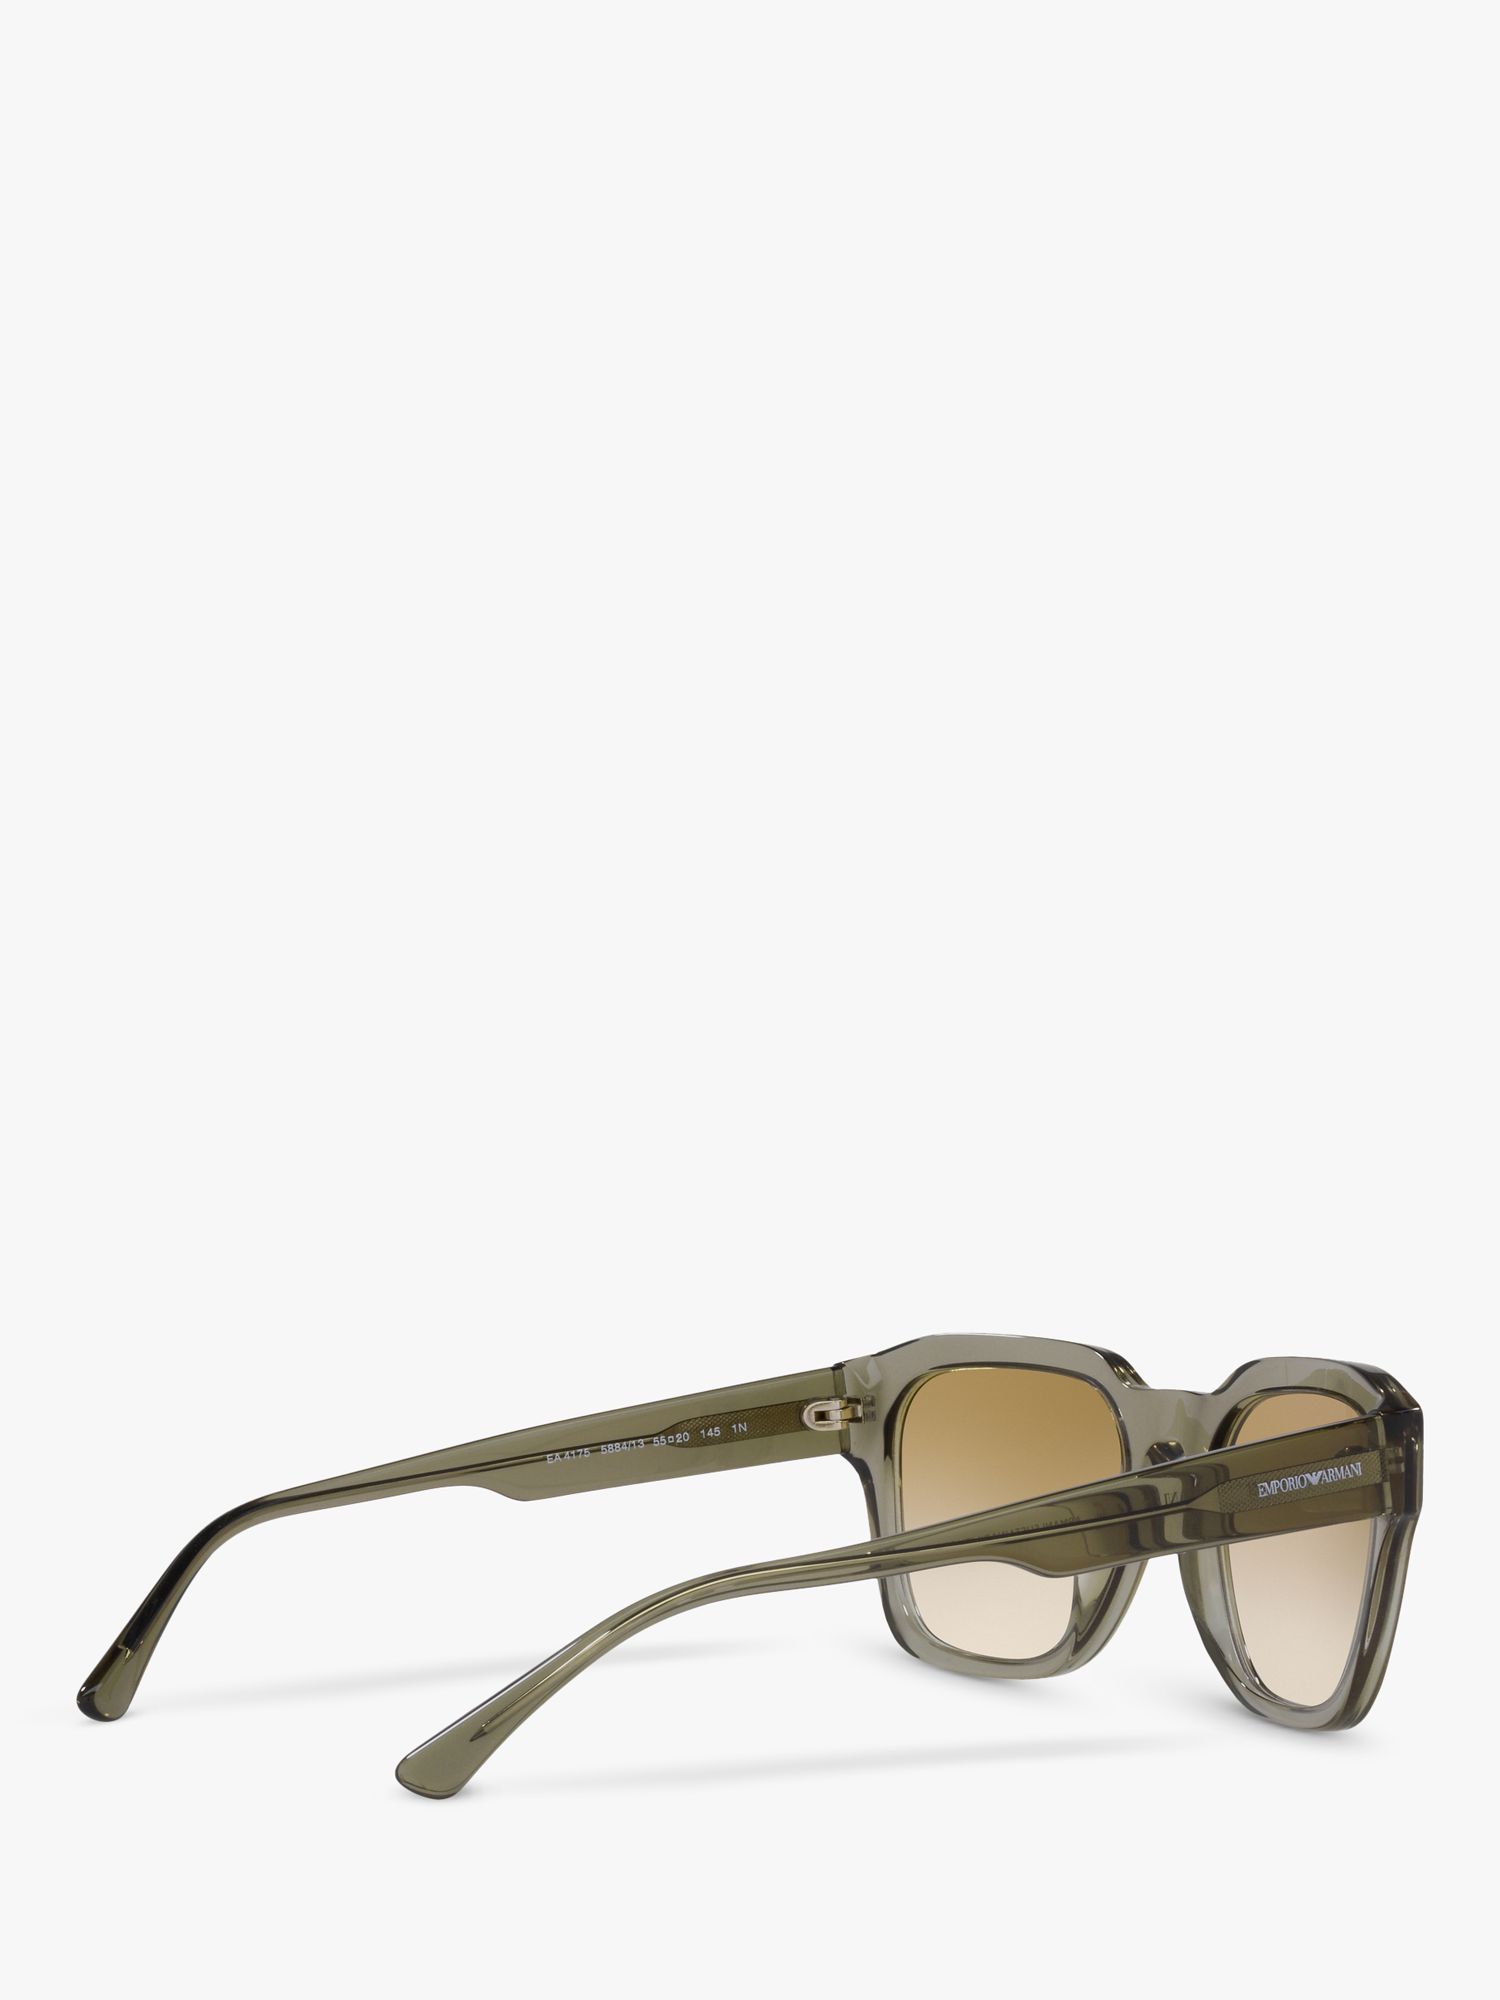 Emporio Armani EA4175 Men's Square Sunglasses,Transparent Green/Brown  Gradient at John Lewis & Partners